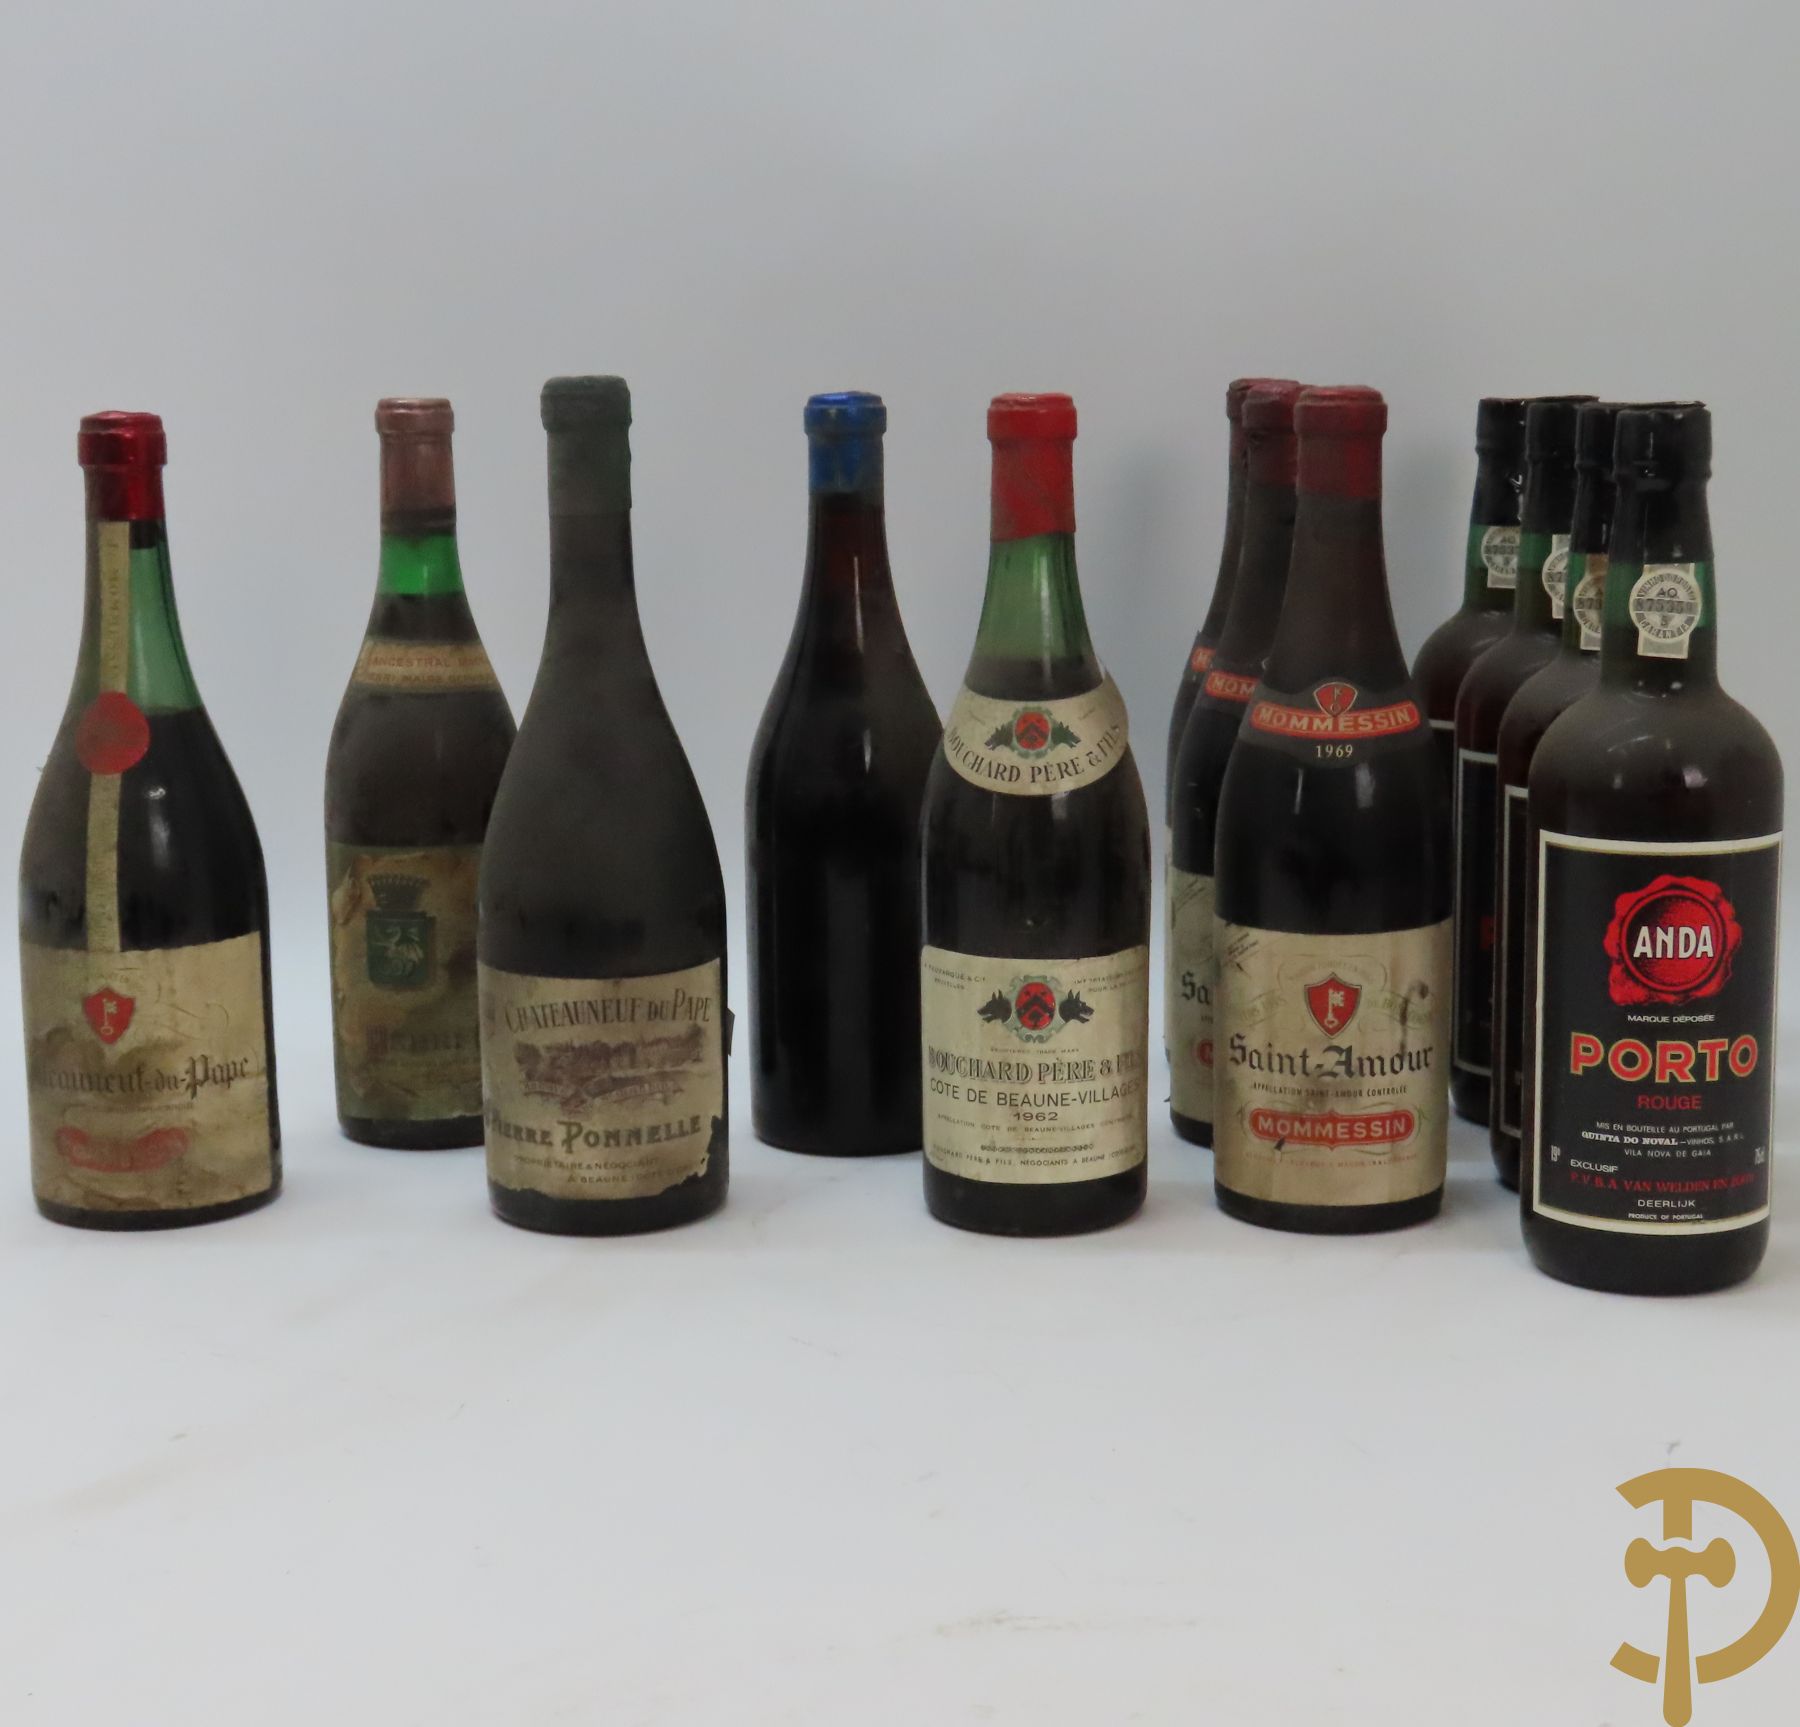 2 flessen Chateauneuf du Pape + 3 flessen Saint Amour '69 + 4 flessen Porto + 2 flessen onbekende wijn